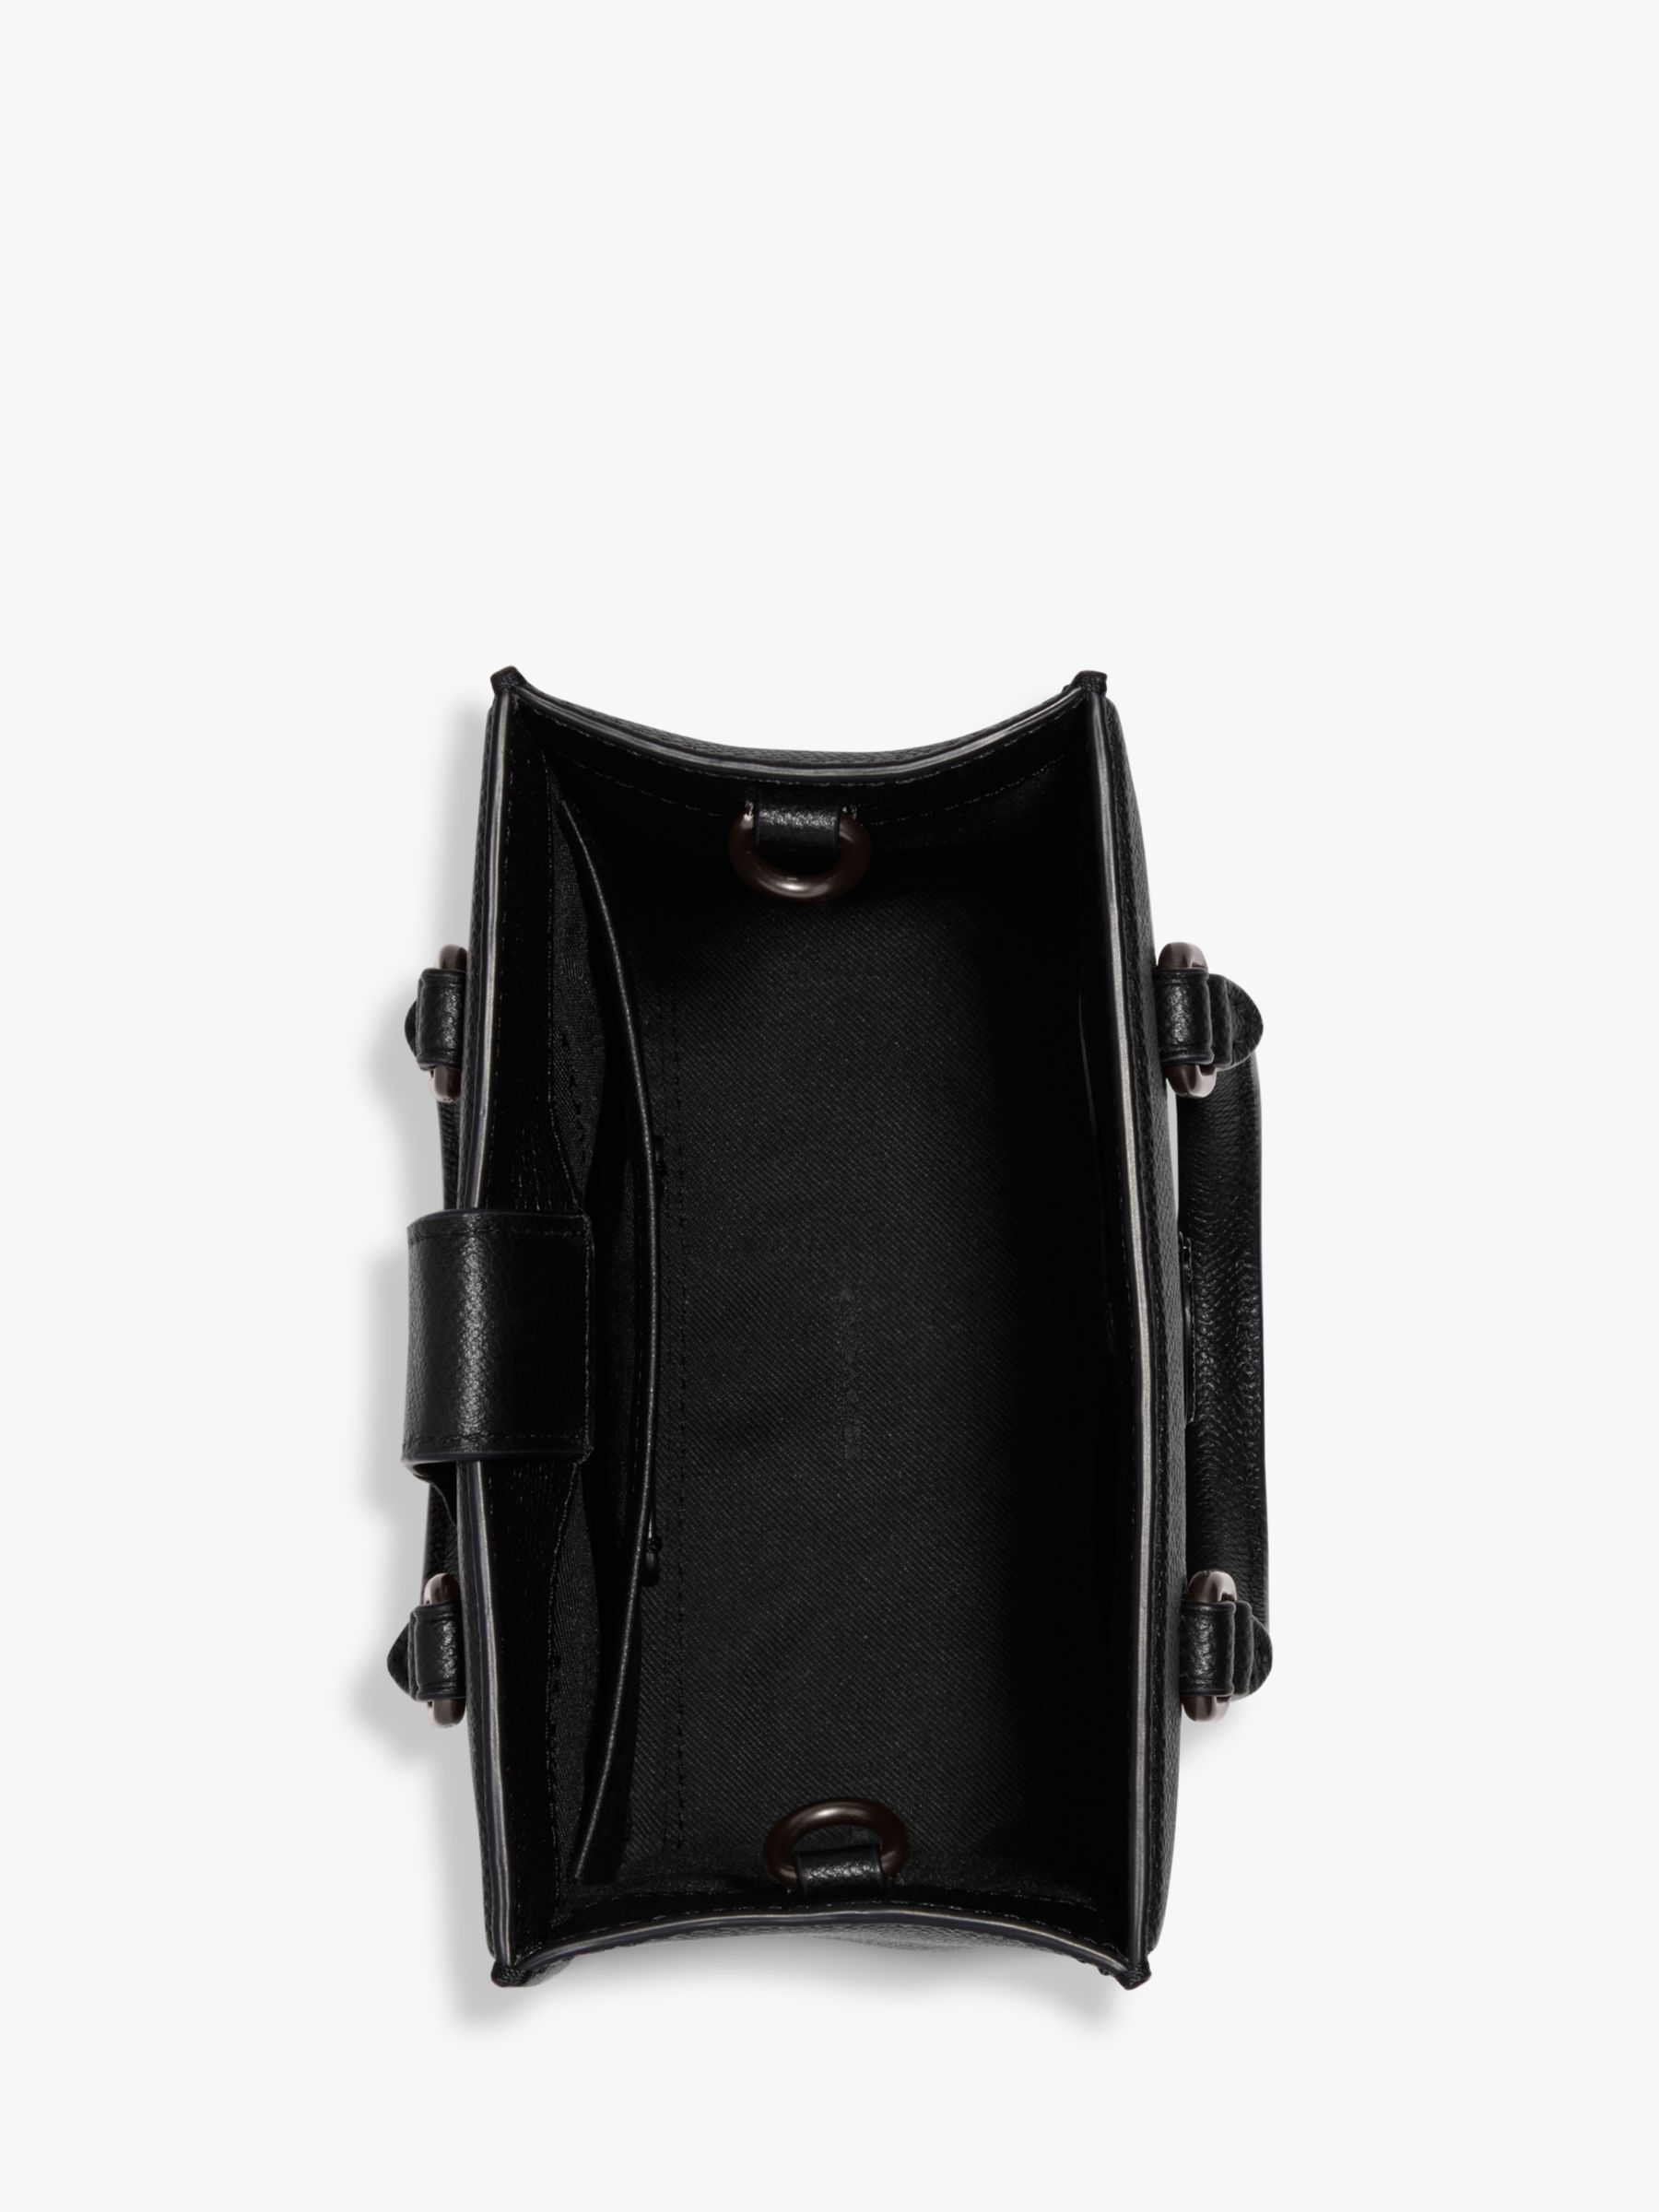 Coach Tote 16 Leather Grab Bag, Black at John Lewis & Partners